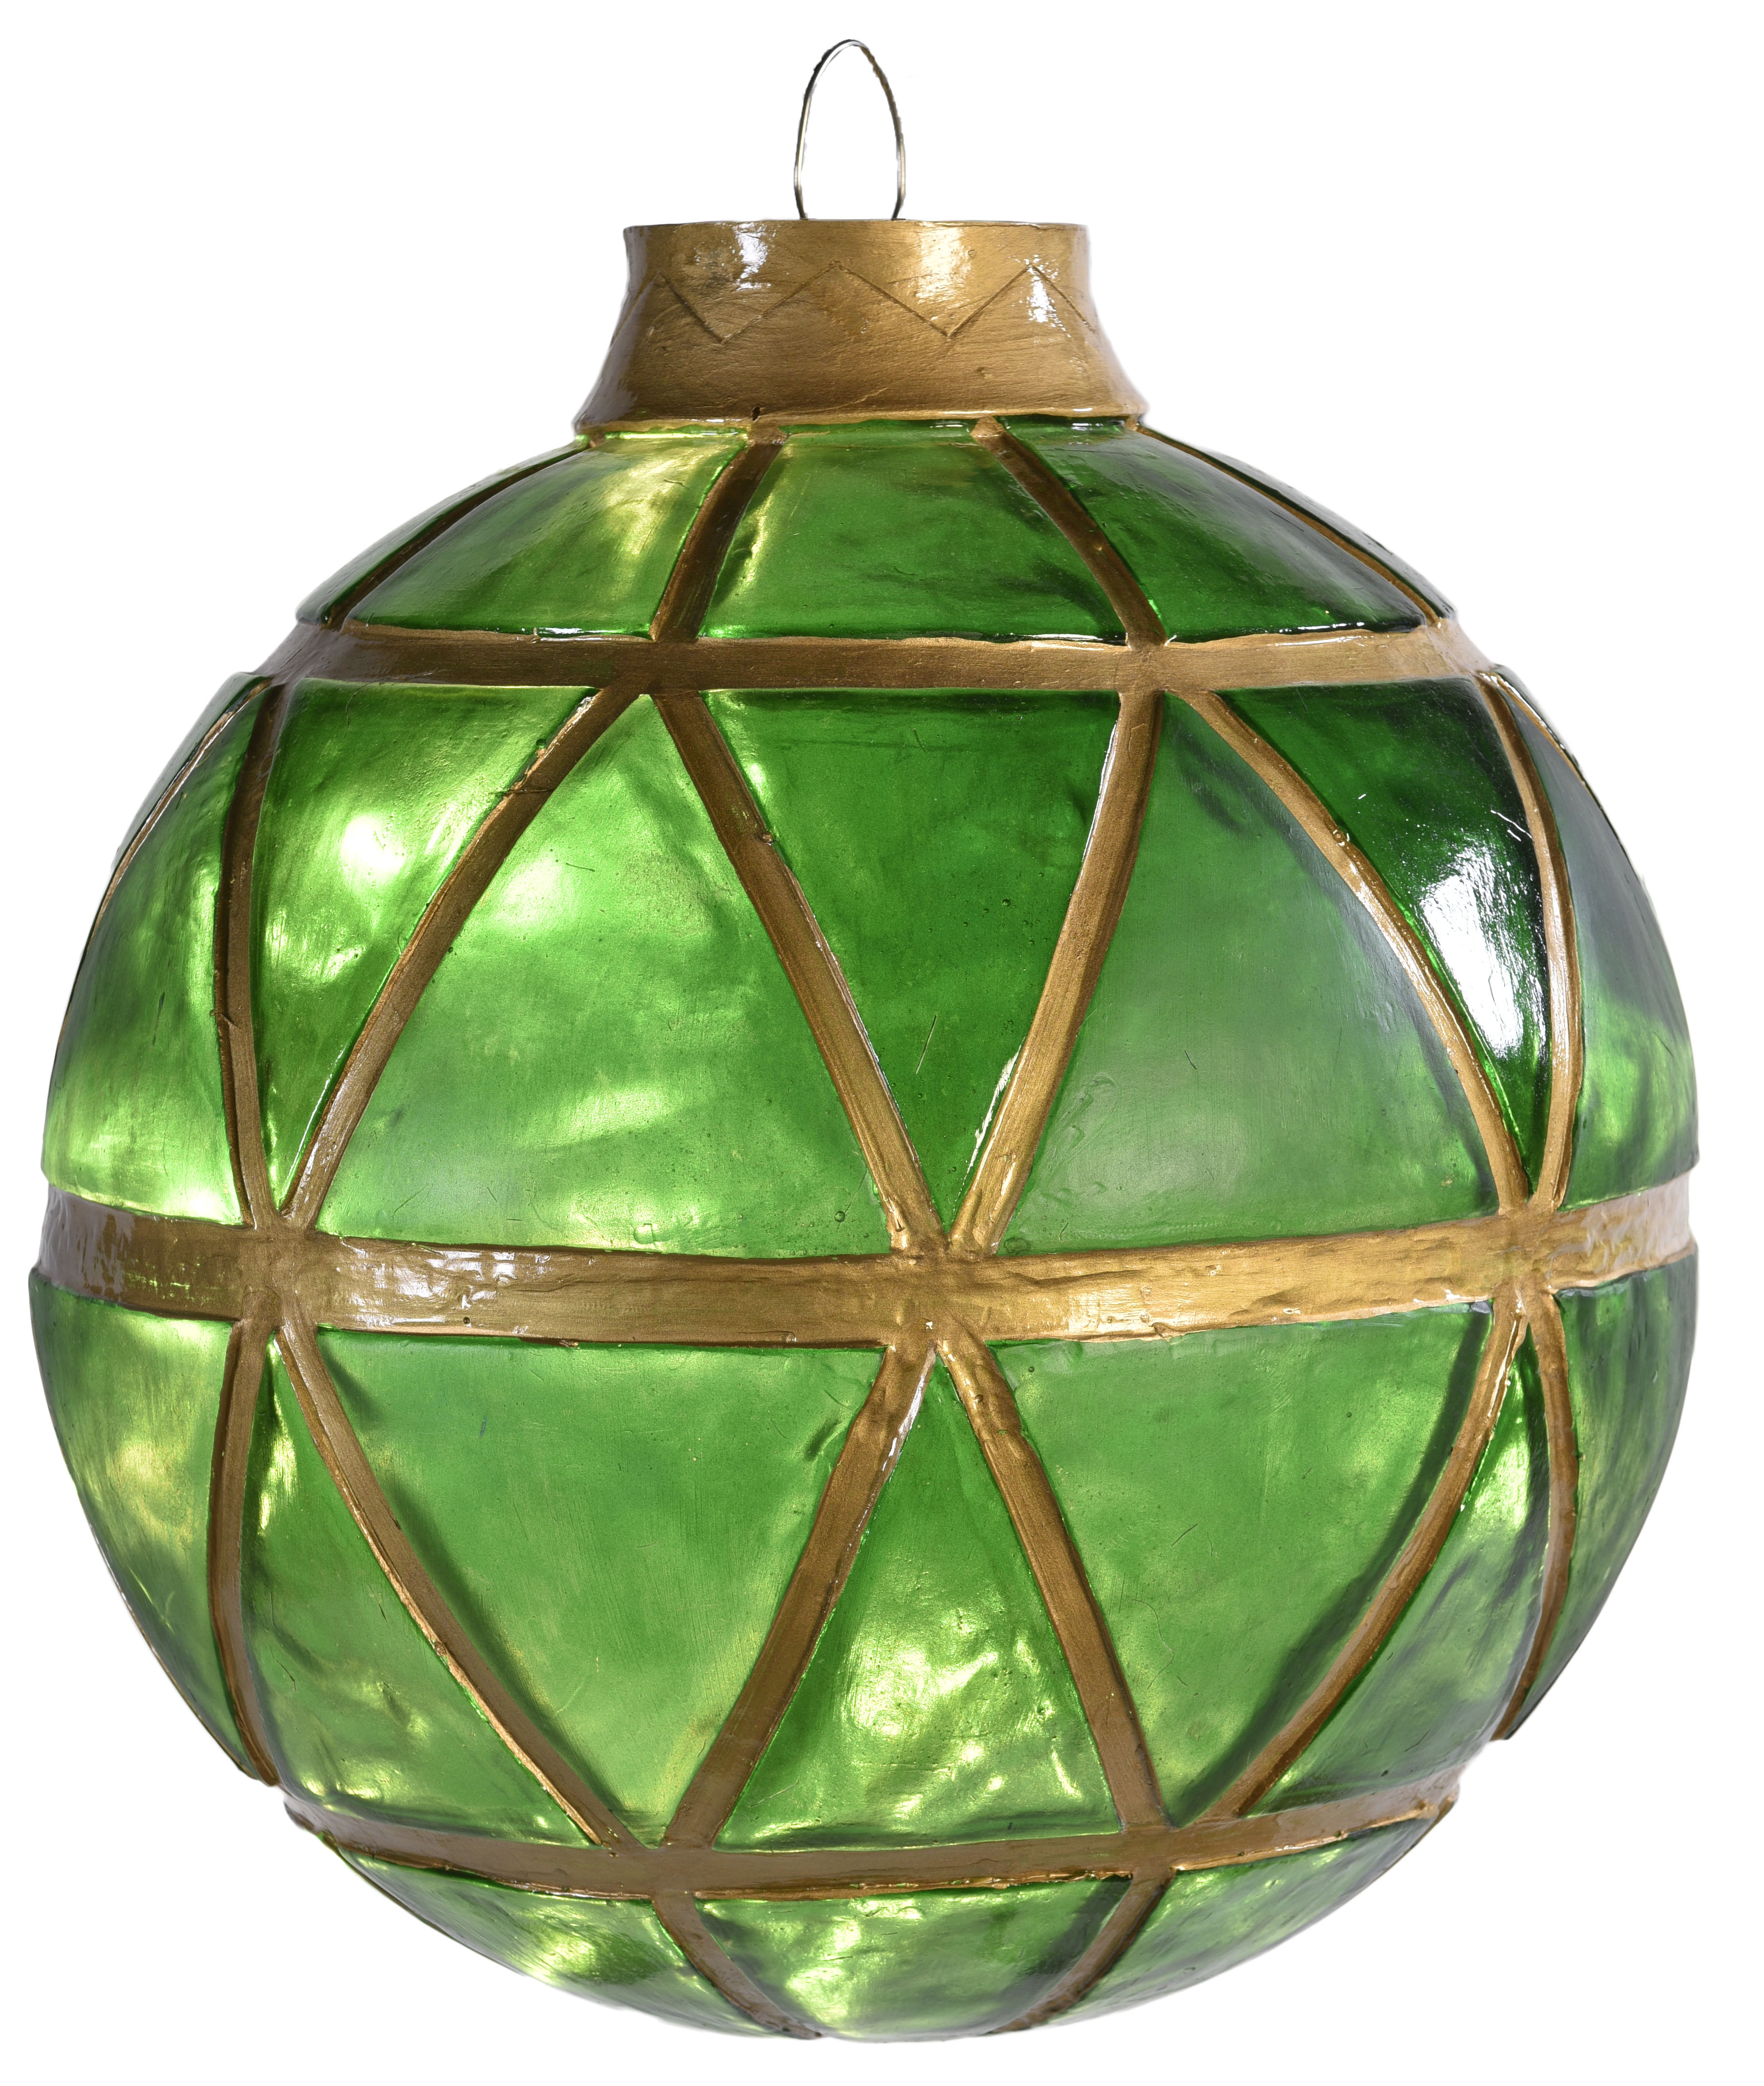 Illuminated Green Mosaic Ball